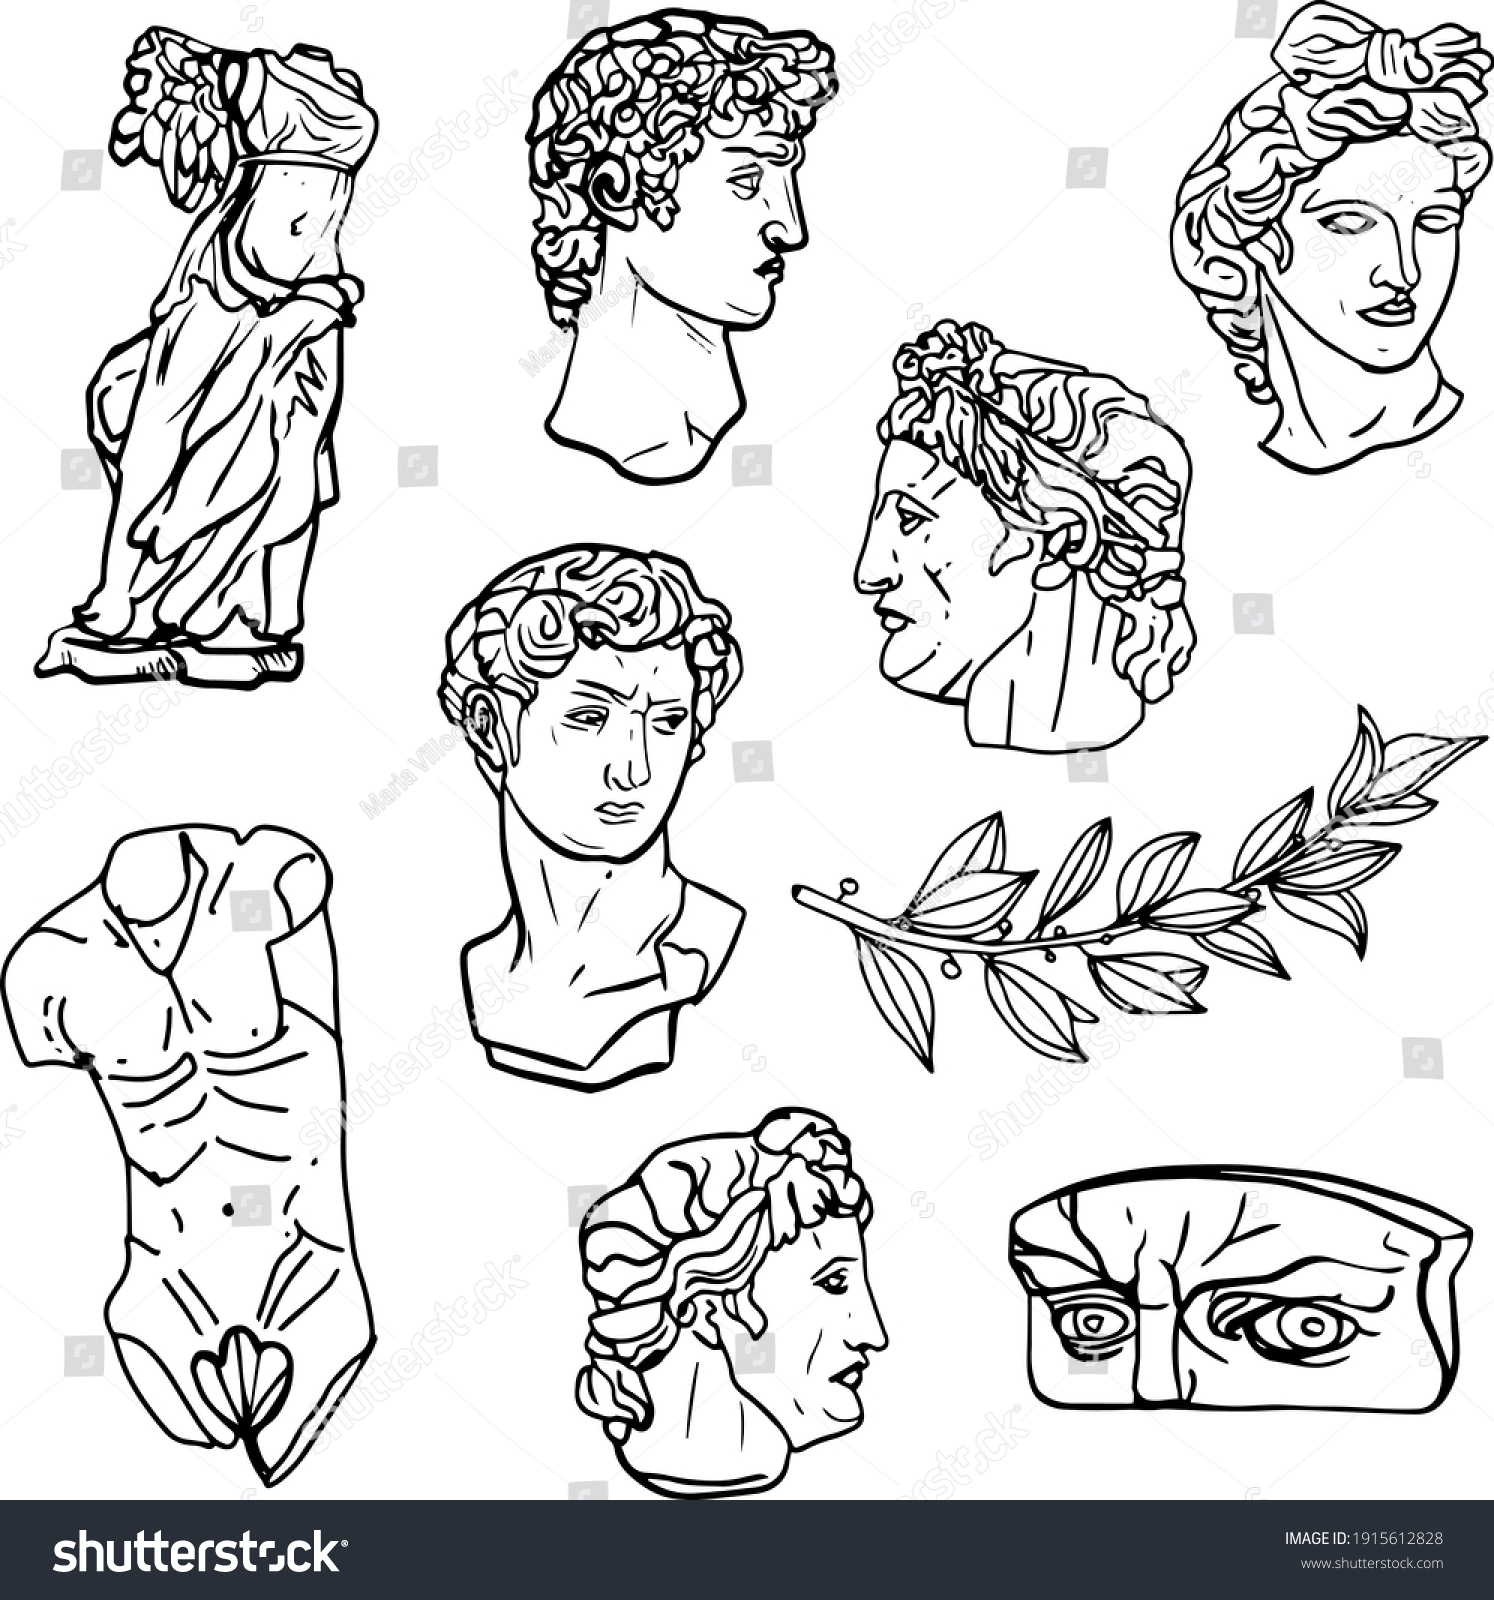 Greek god drawing Images, Stock Photos & Vectors Shutterstock